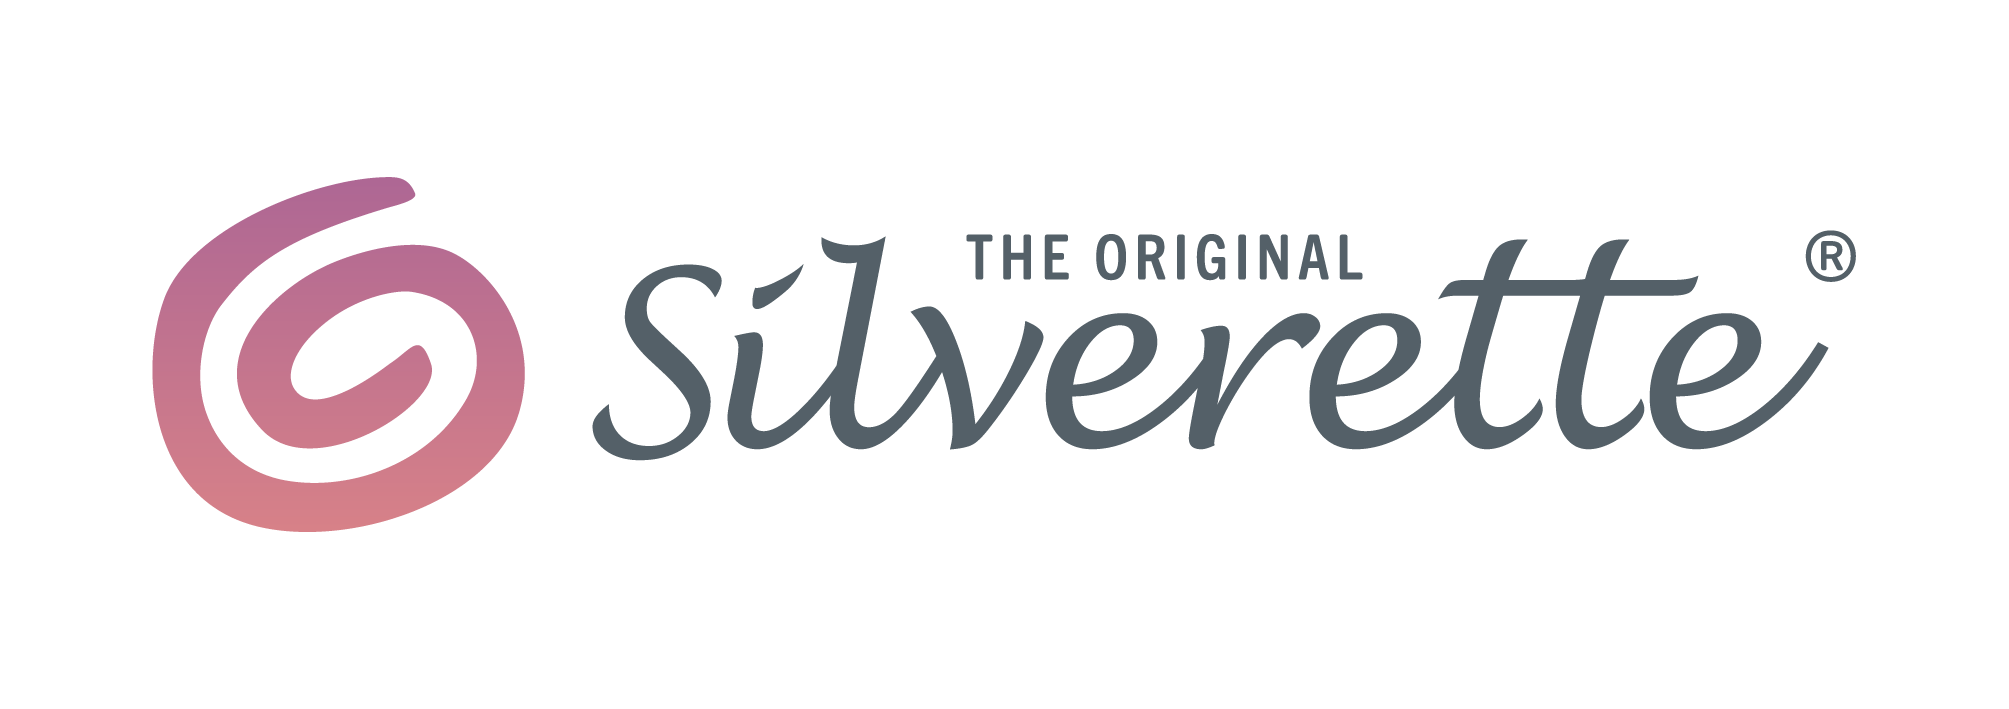 Silverette - The Original Logo